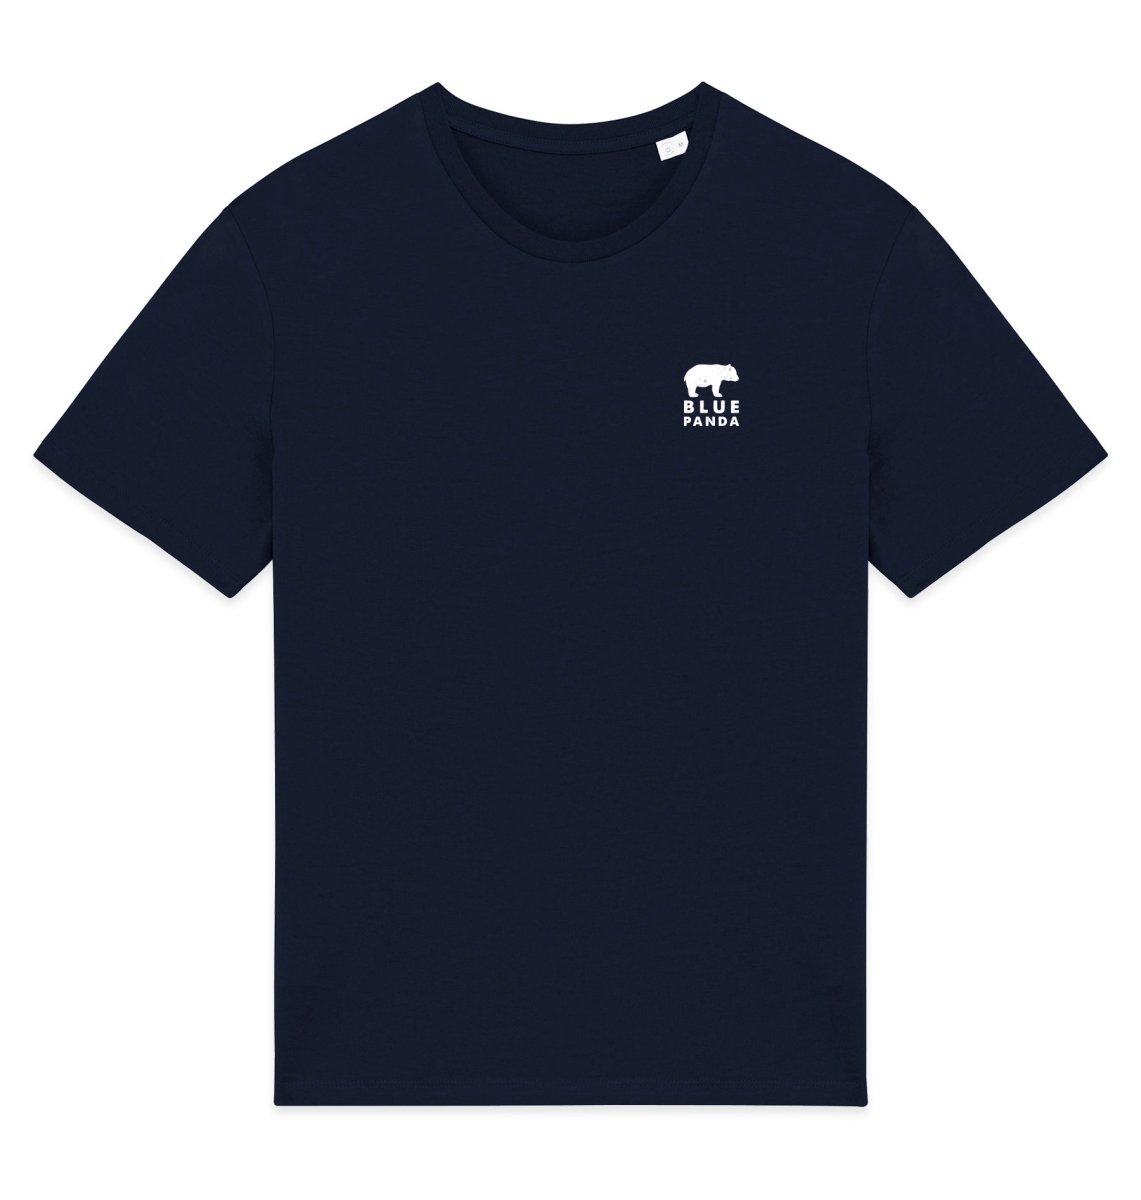 Jellyfish Mens T-shirt - Blue Panda